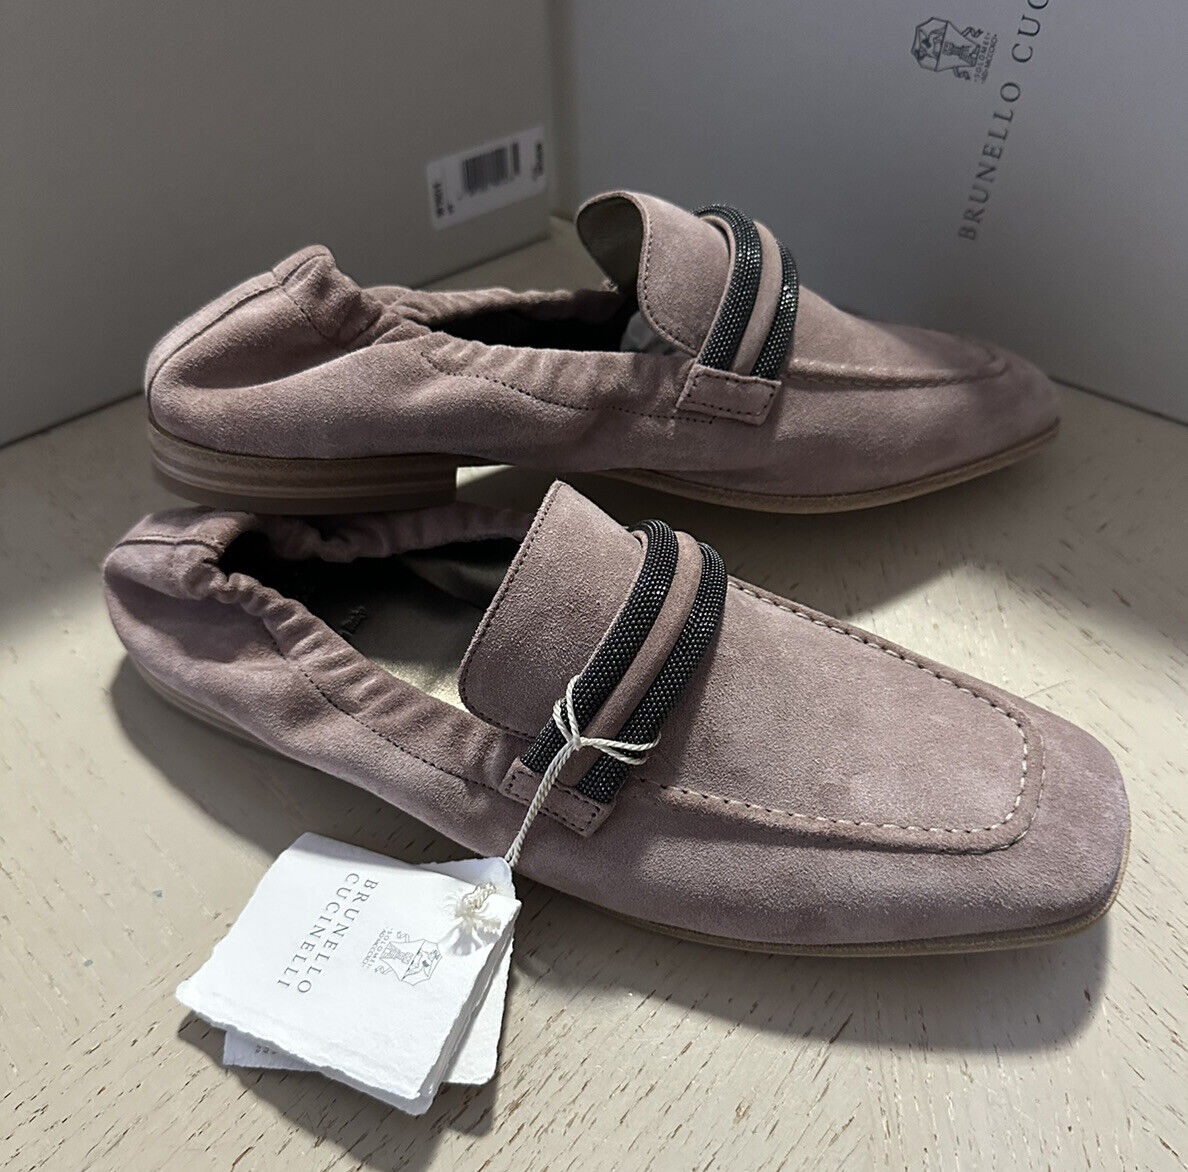 NIB $ 1250 Brunello Cucinelli Damen Wildleder Monili-Strap Loafers Schuhe 10 US/40 Eu